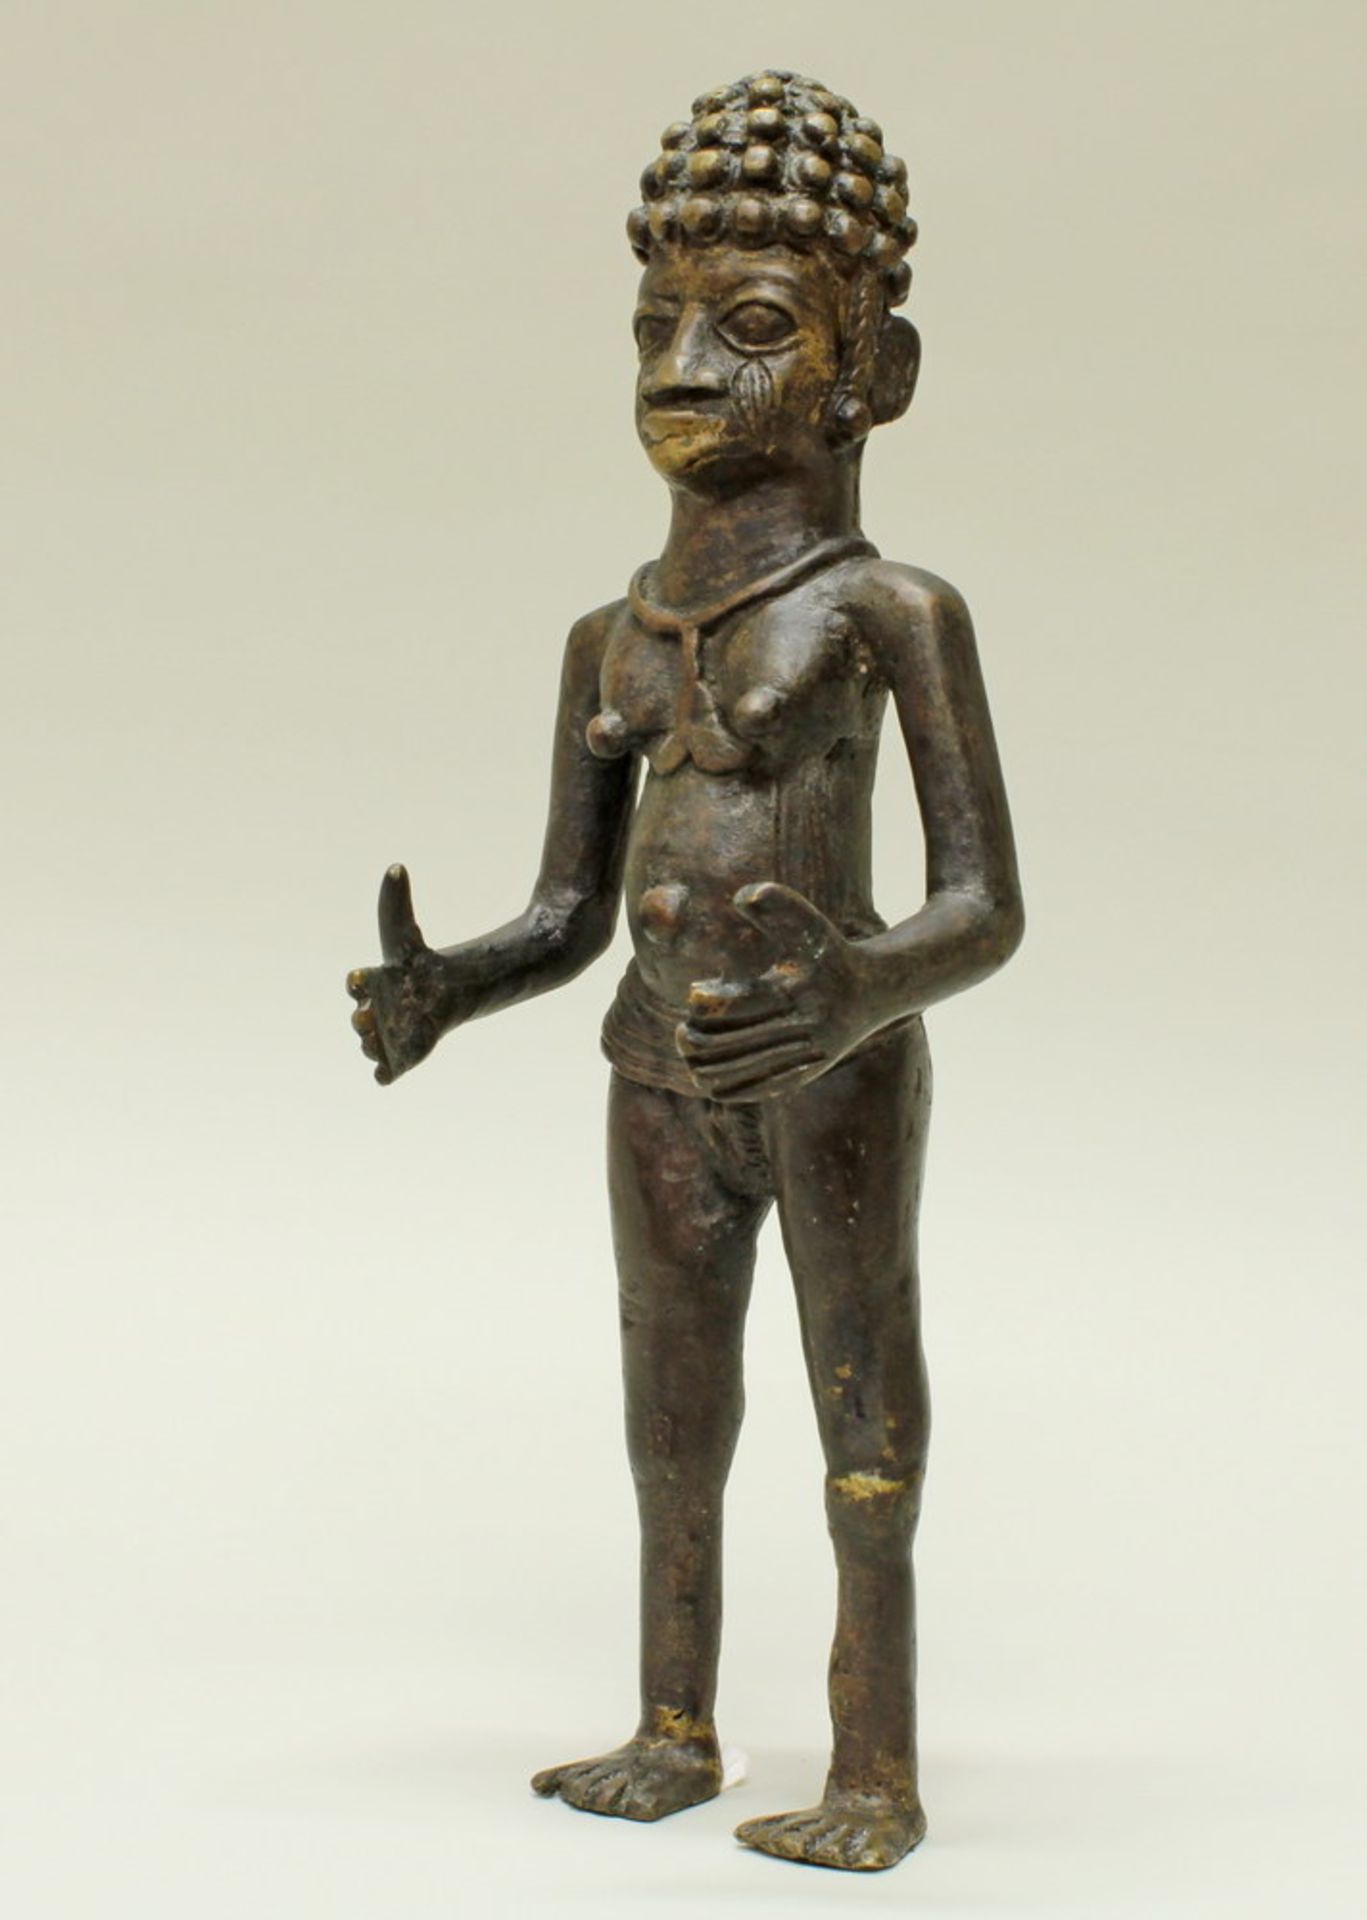 Bronzeskulptur, "Afrikaner", Benin, Afrika, 43 cm hoch- - -25.00 % buyer's premium on the hammer - Image 2 of 6